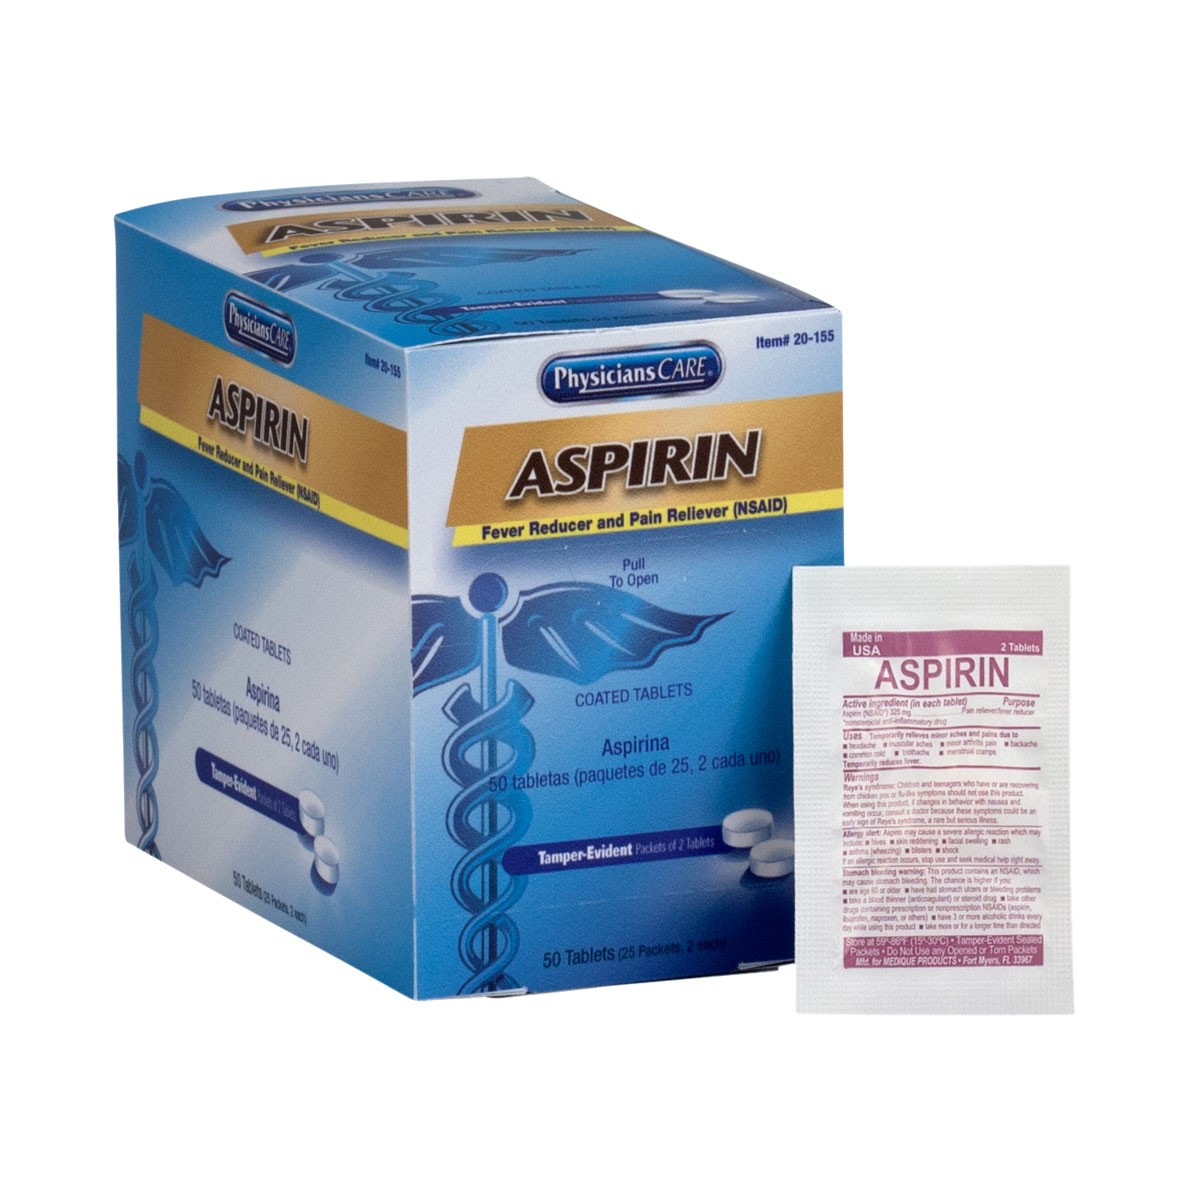 PhysiciansCare 325mg Aspirin, 25x2/Box - First Aid Safety